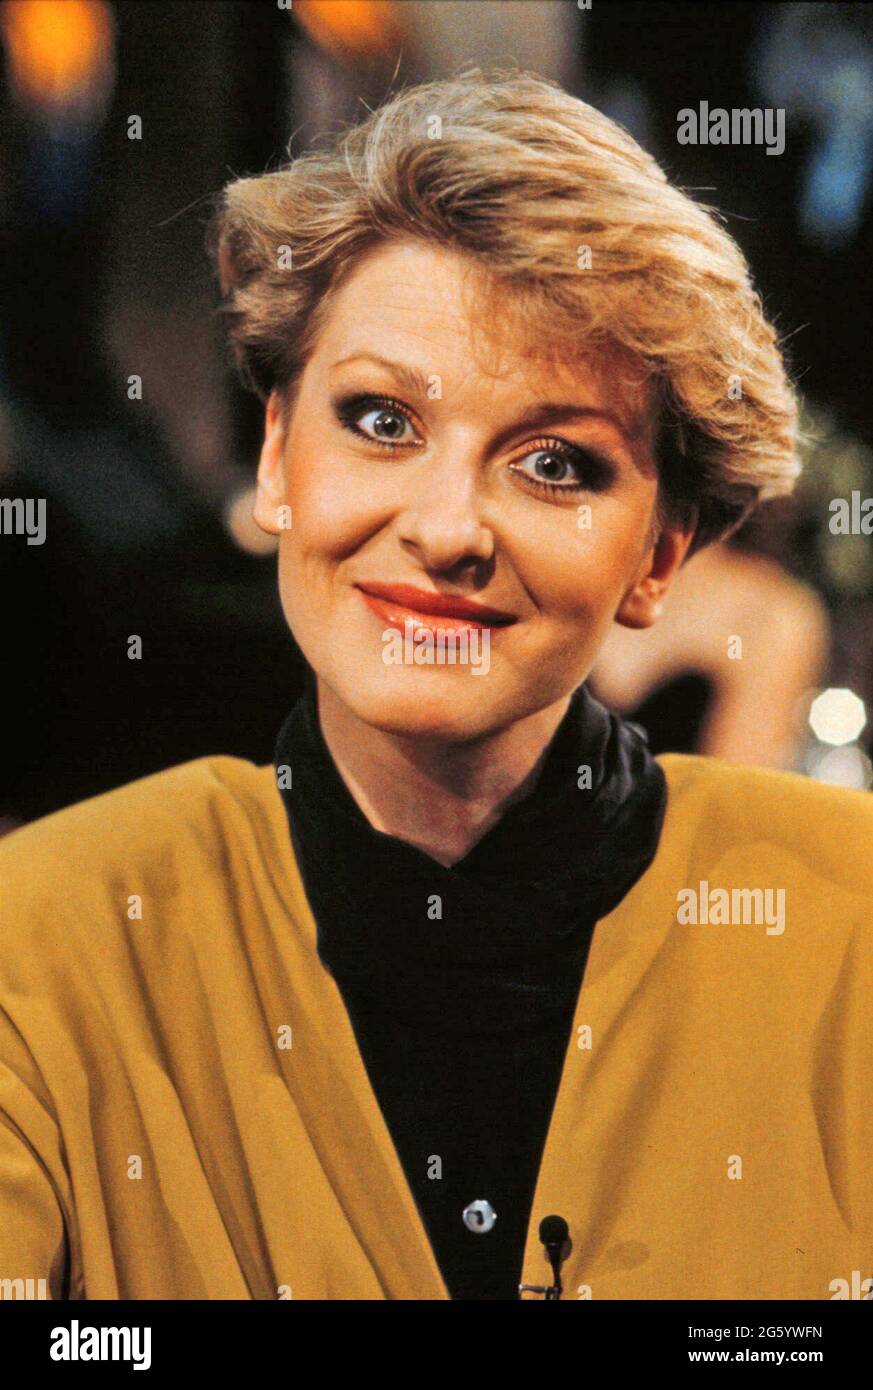 Carmen Nebel, deutsche Fernsehmoderatorin, Portrait circa 1994. Carmen Nebel, German TV presenter, portrait circa 1994. Stock Photo